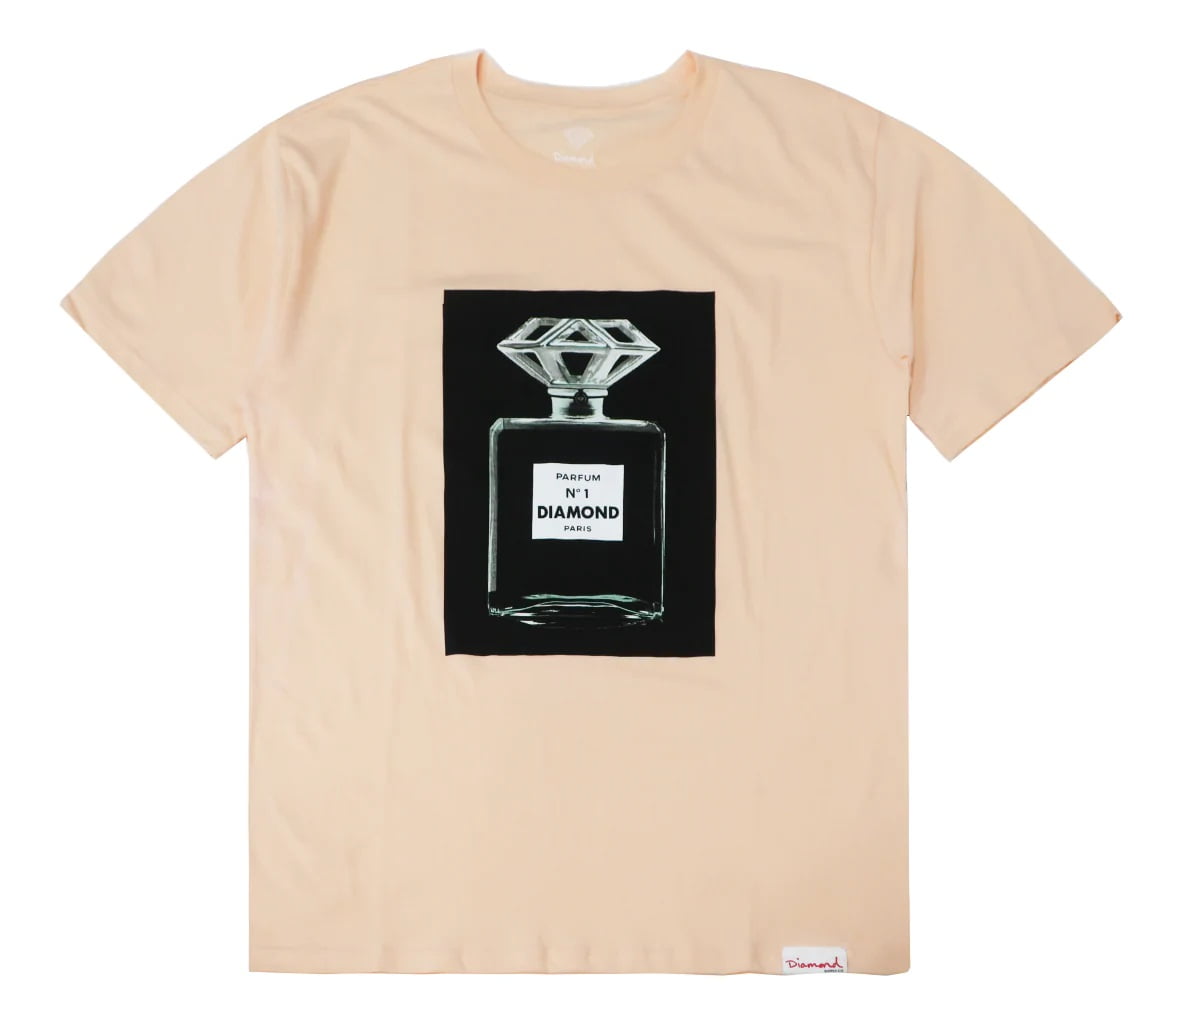 Diamond Supply Co. Men's Parfum Tee T-Shirt (X-Large, Peach), Size: XL, Beige